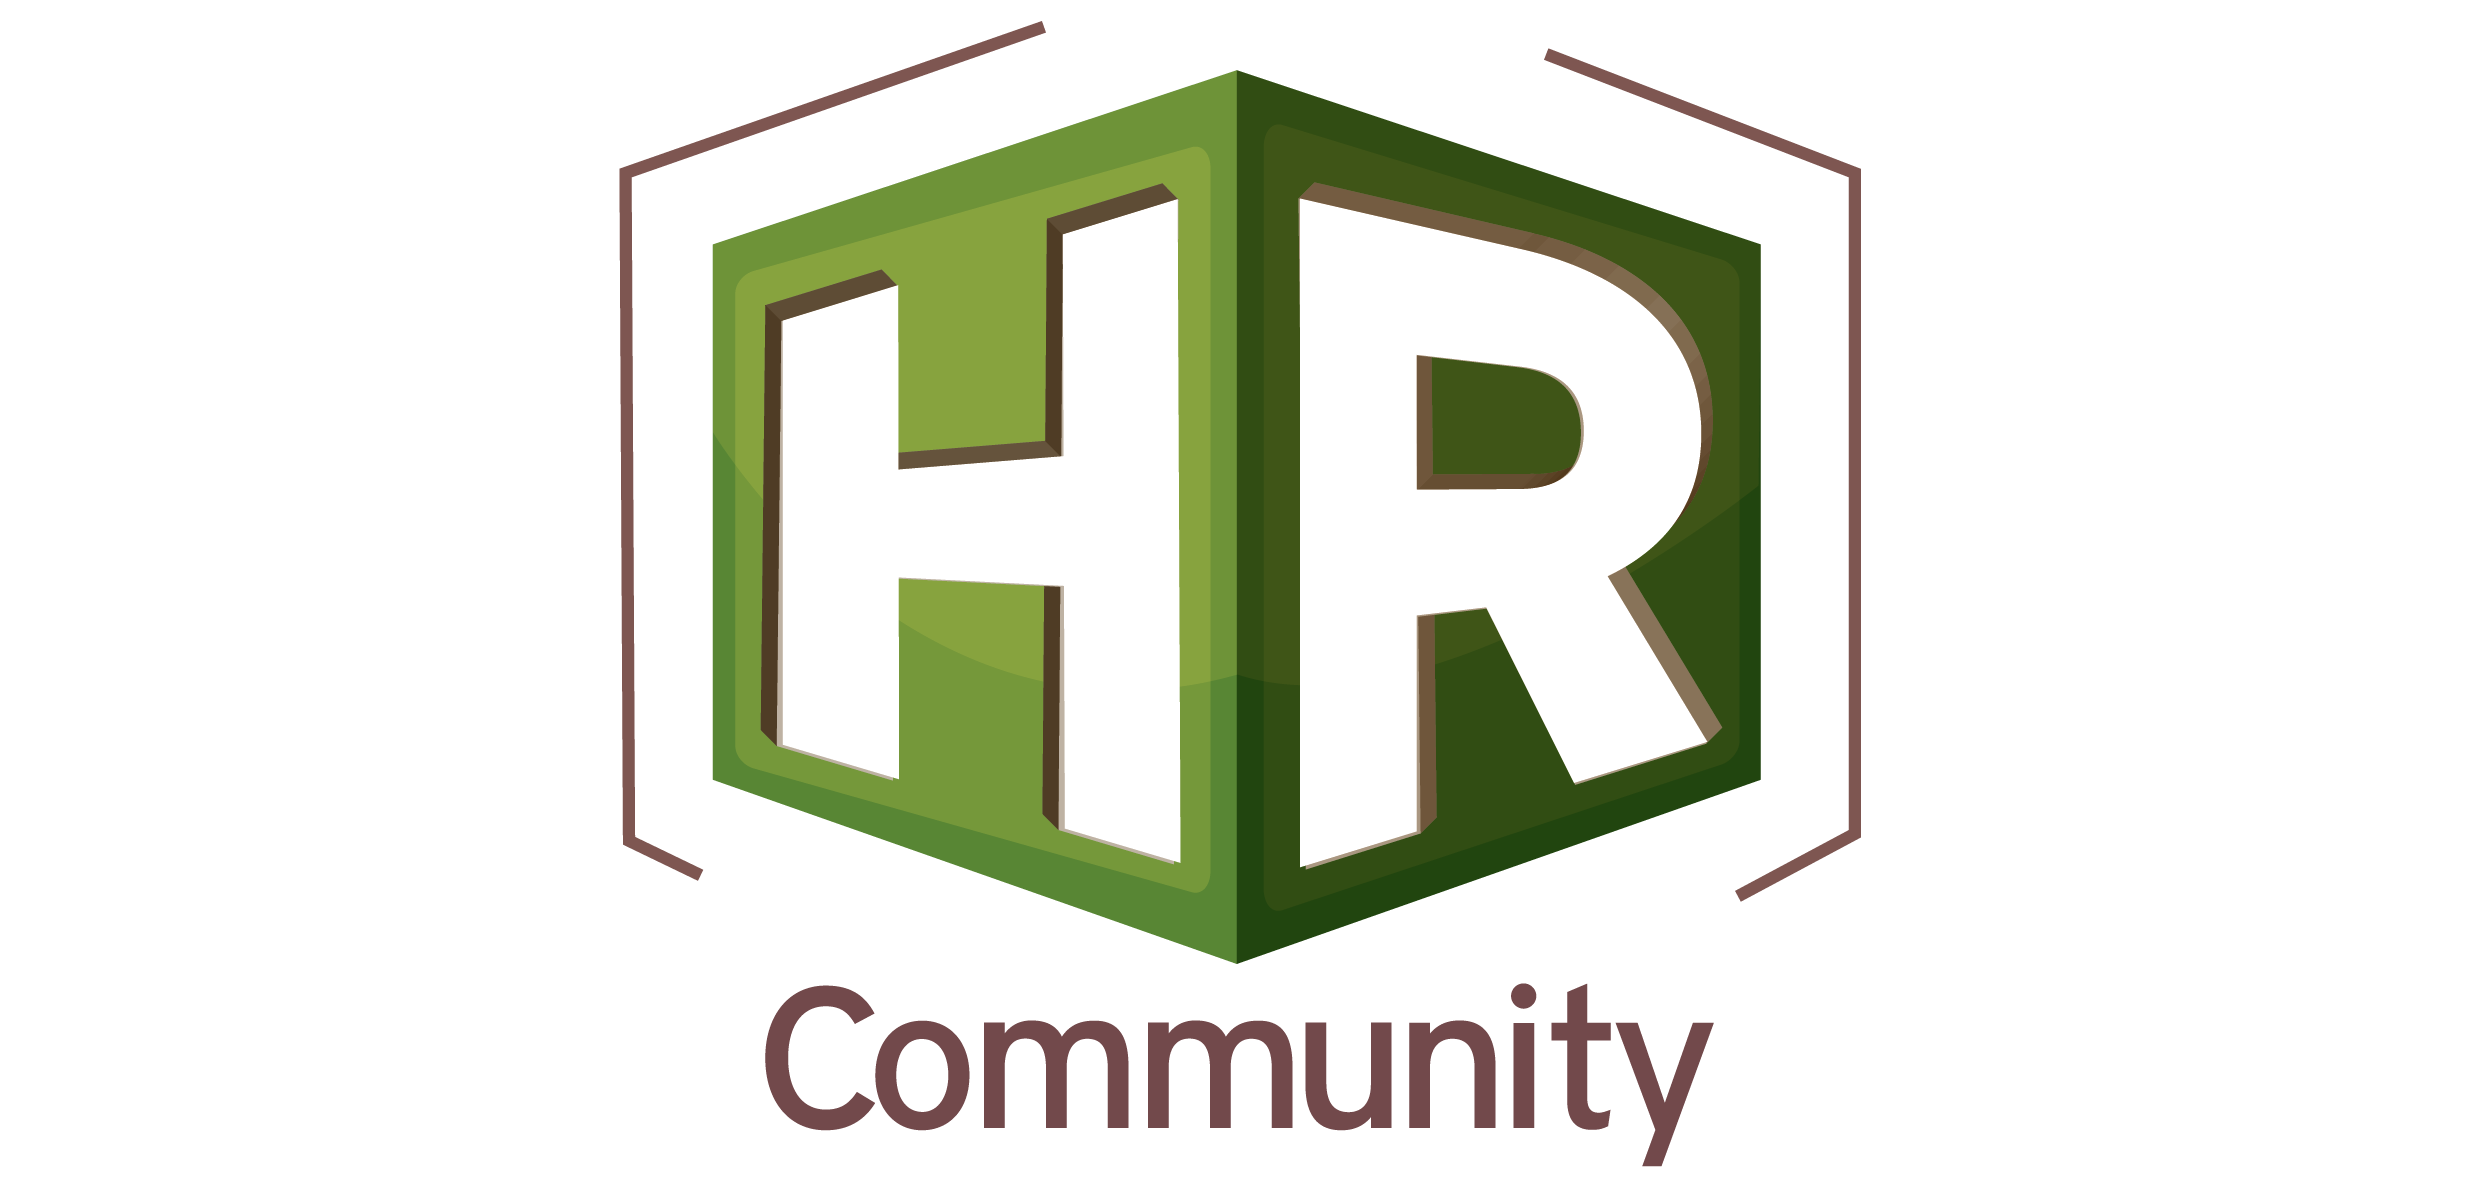 hr community logo jpg